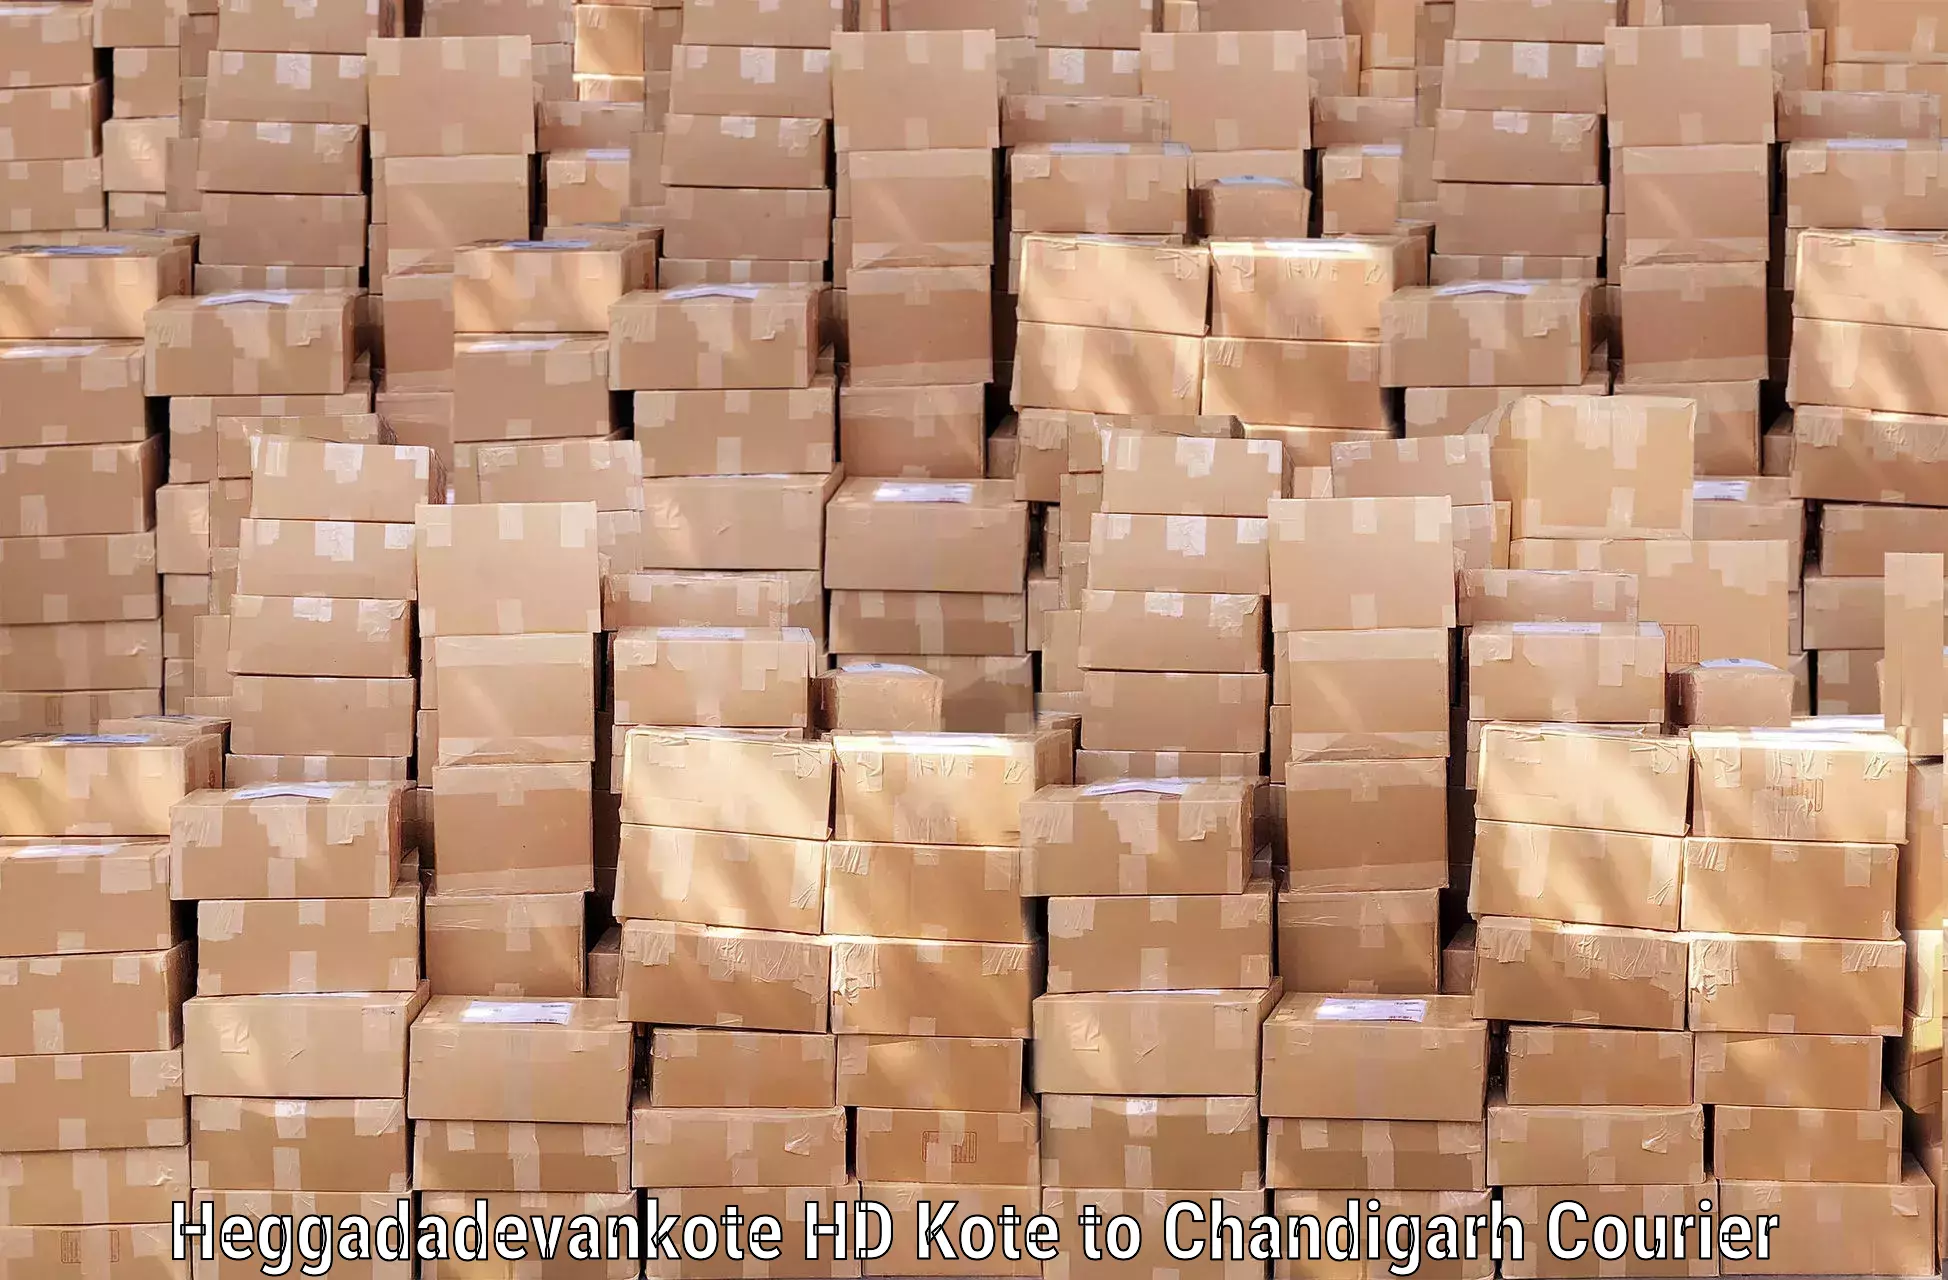 Baggage courier FAQs Heggadadevankote HD Kote to Chandigarh